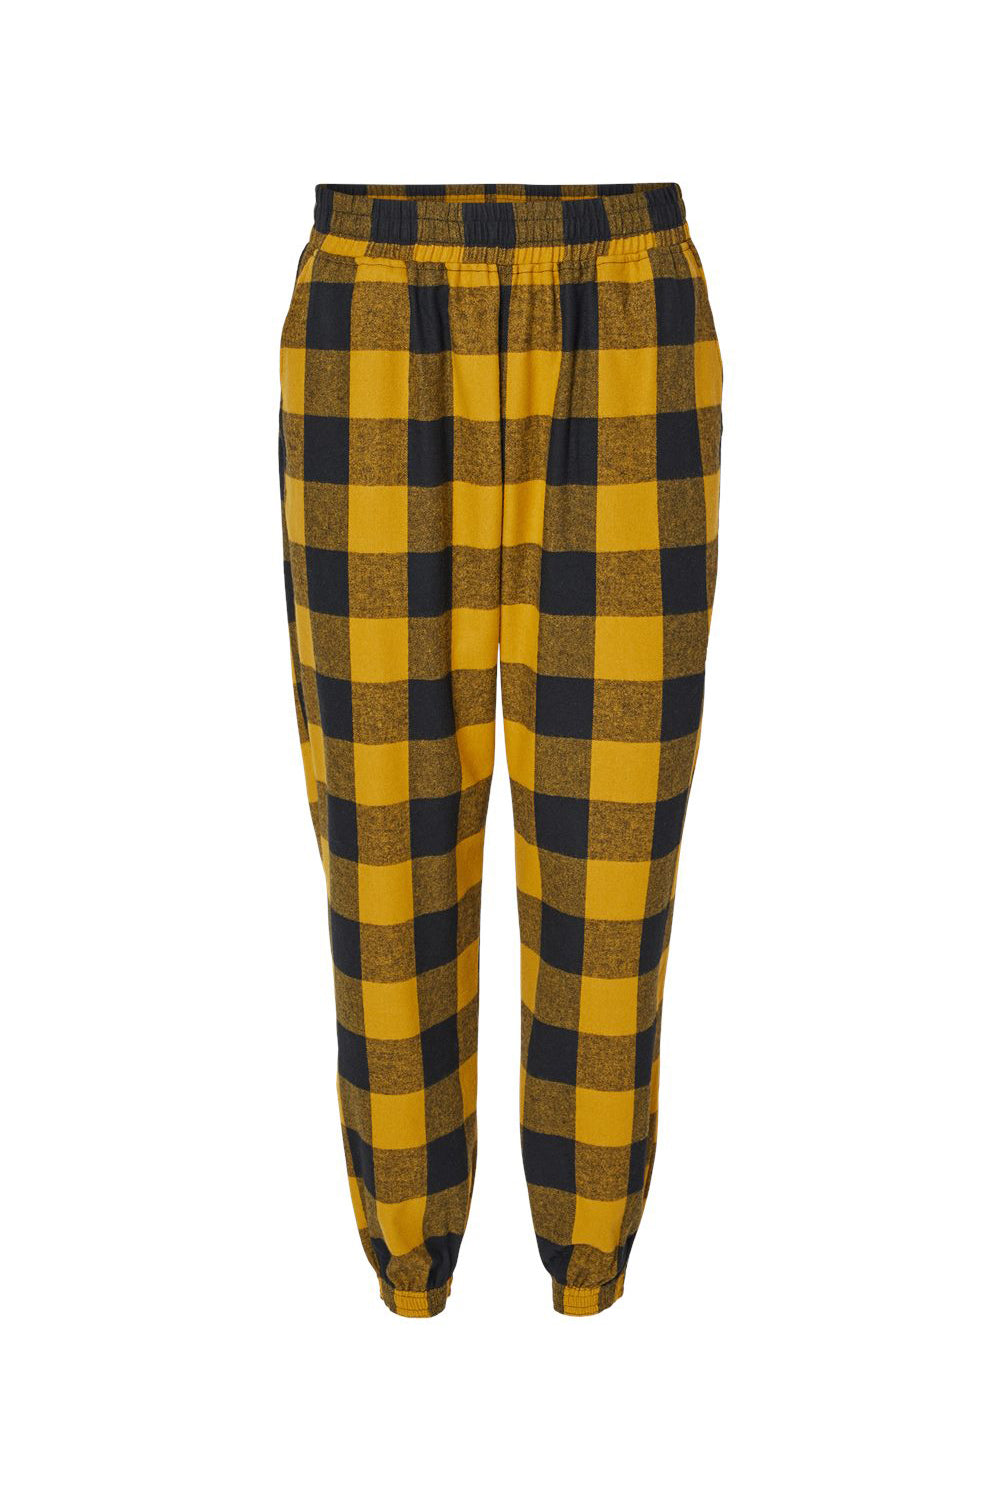 Burnside 4810 Youth Flannel Jogger Sweatpants w/ Pockets Gold/Black Flat Front